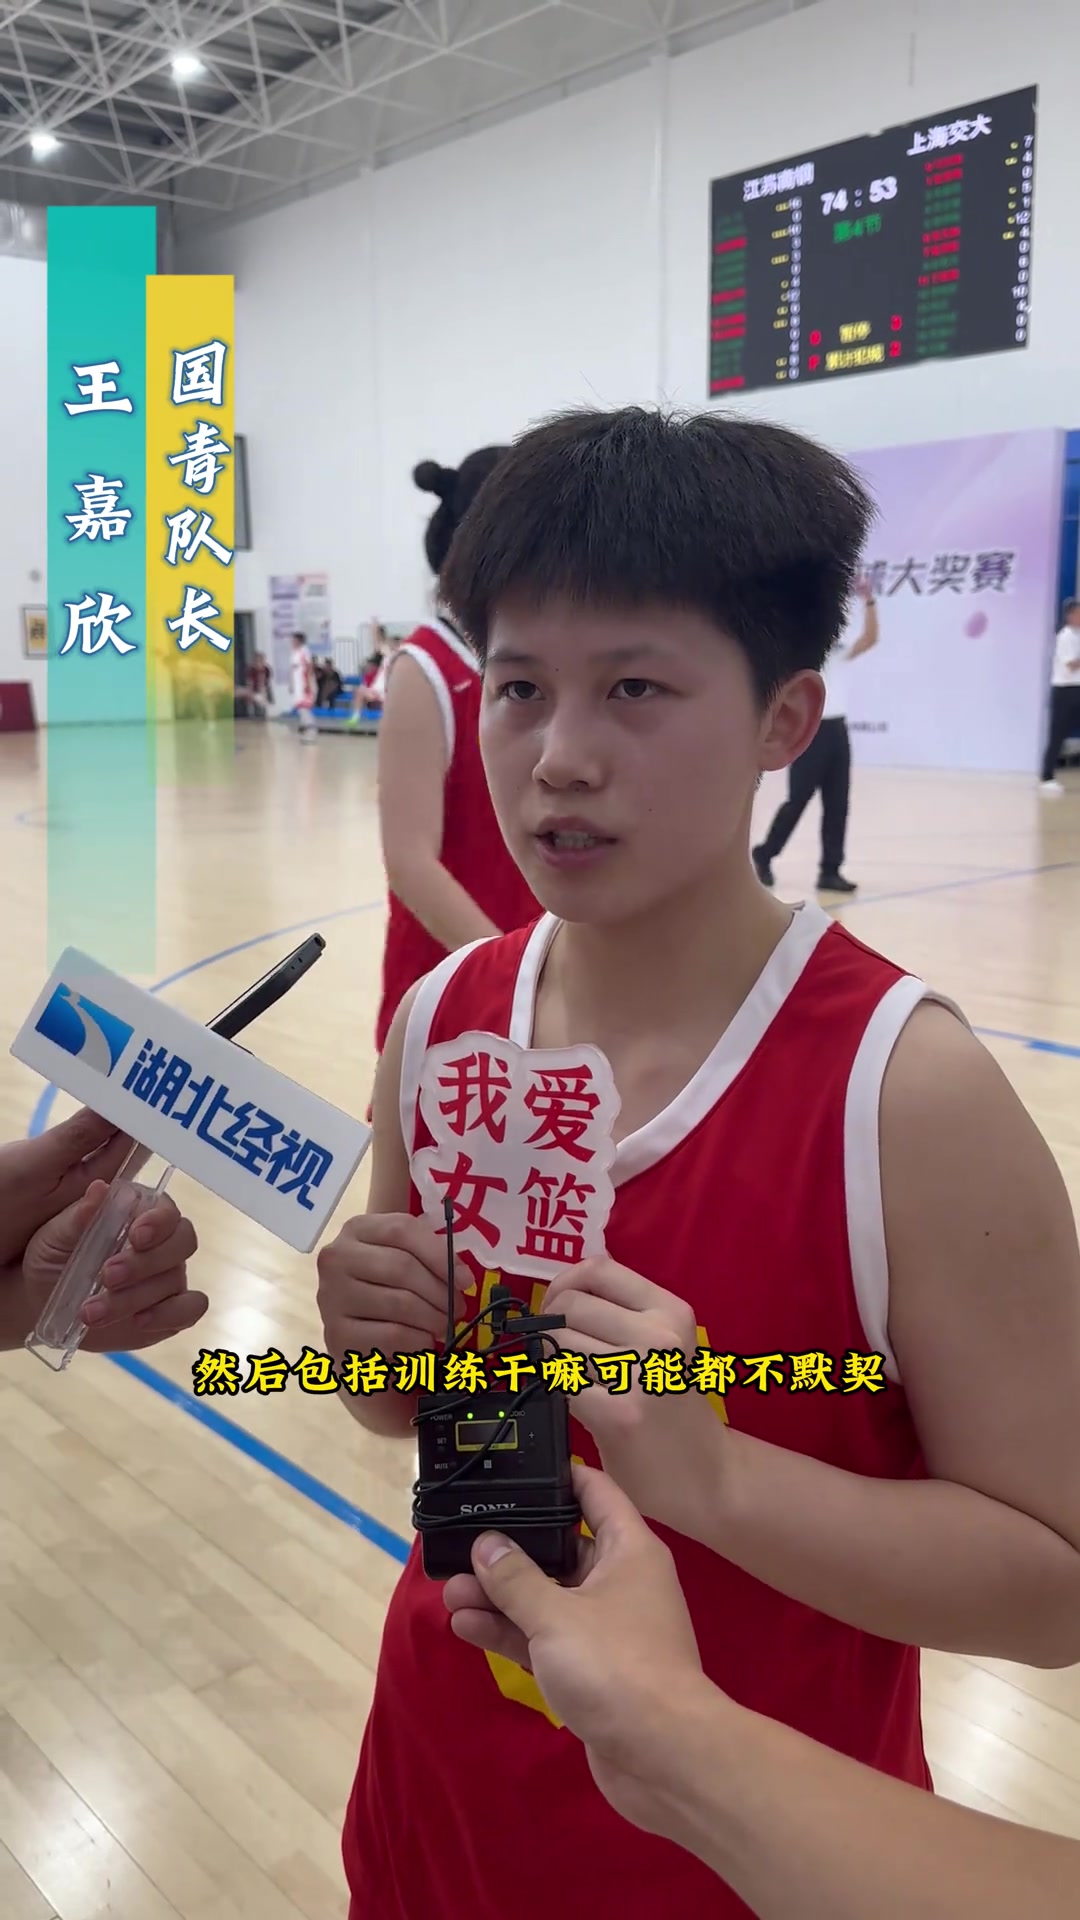 U18女篮队长8号王嘉欣 曾是国青女篮征战金篮杯队内得分王